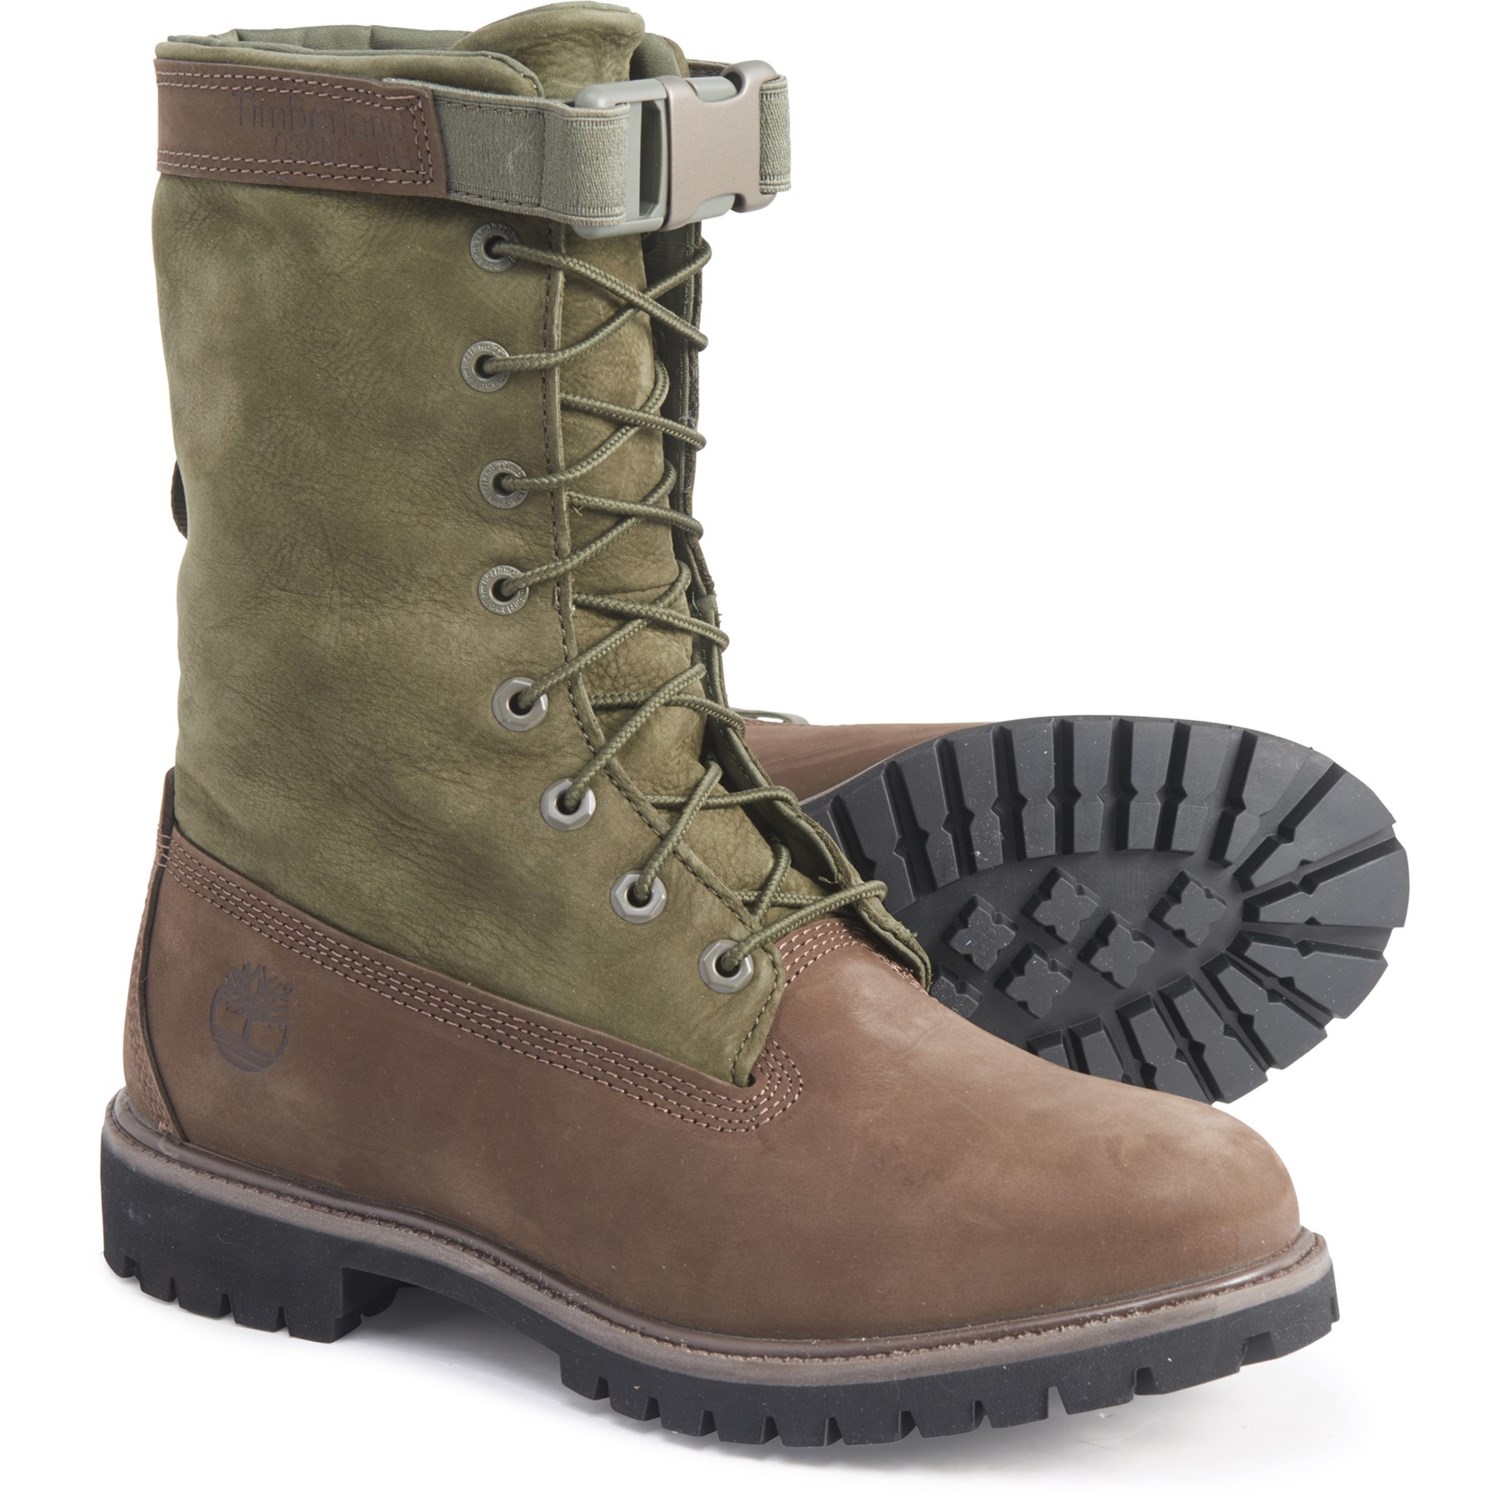 timberland men's gaiter boots